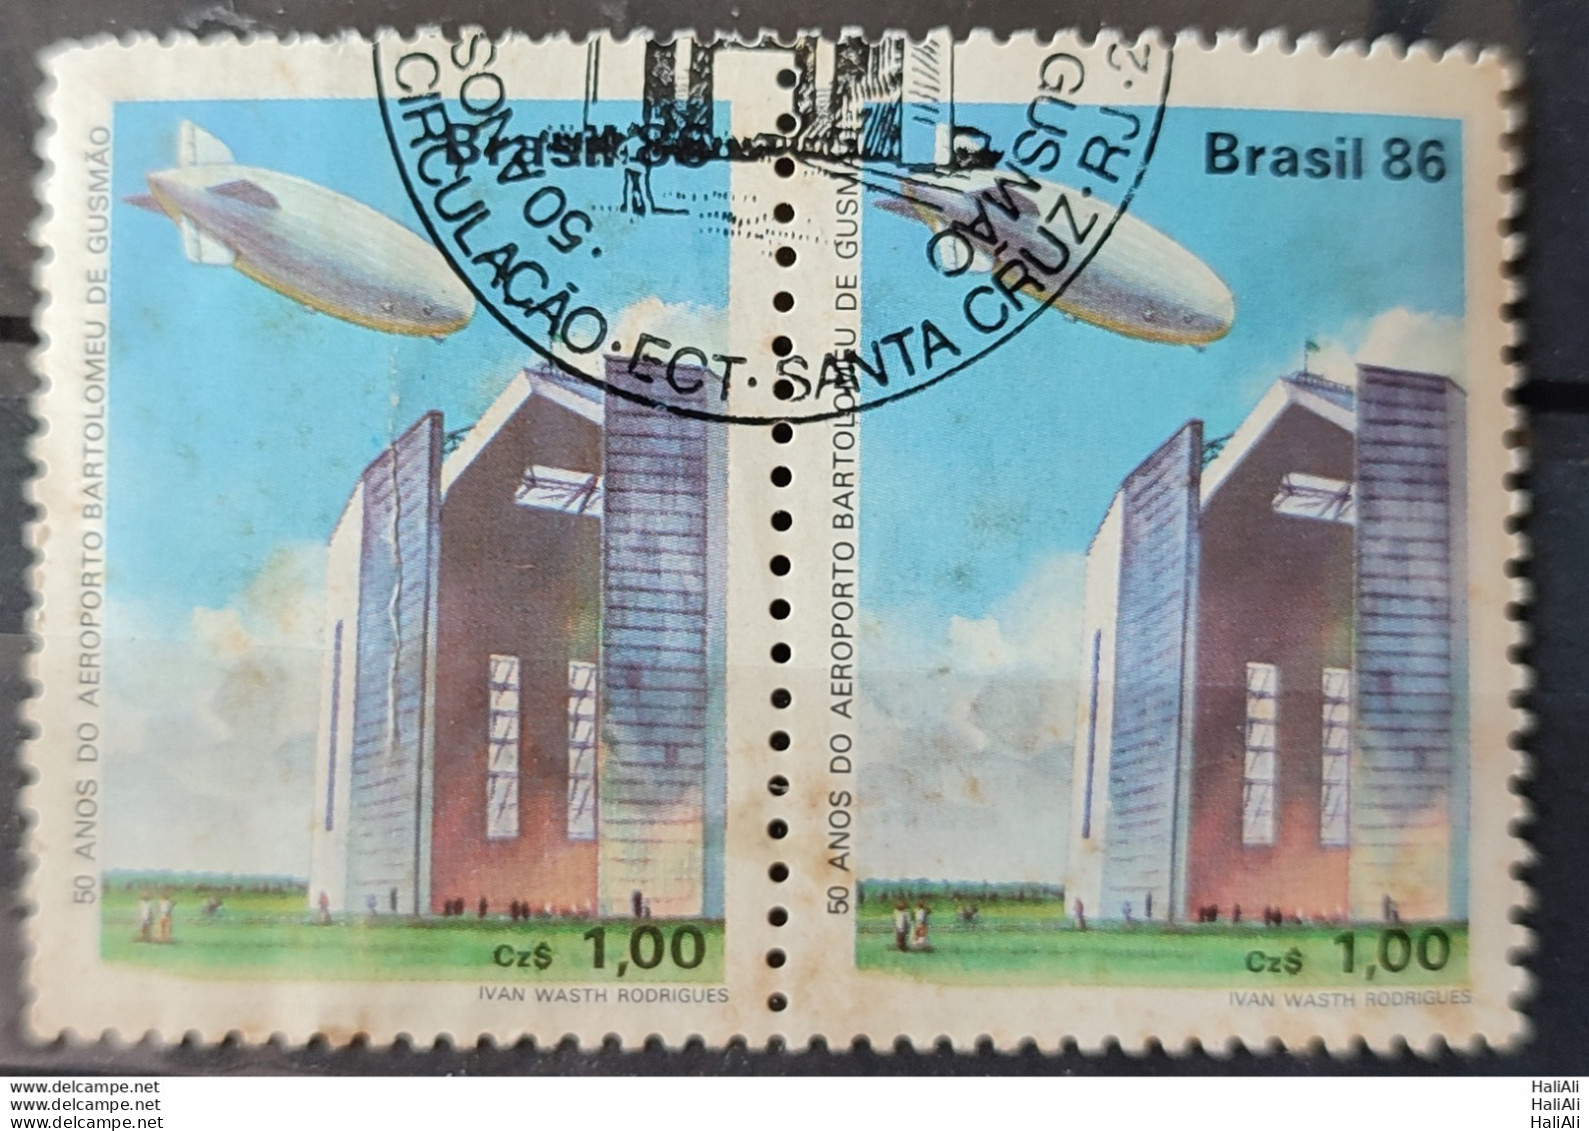 C 1541 Brazil Stamp 50 Years Airport Bartolomeu De Gusmao Balloon Hangar 1986 Dupla Circulated 2 - Gebruikt